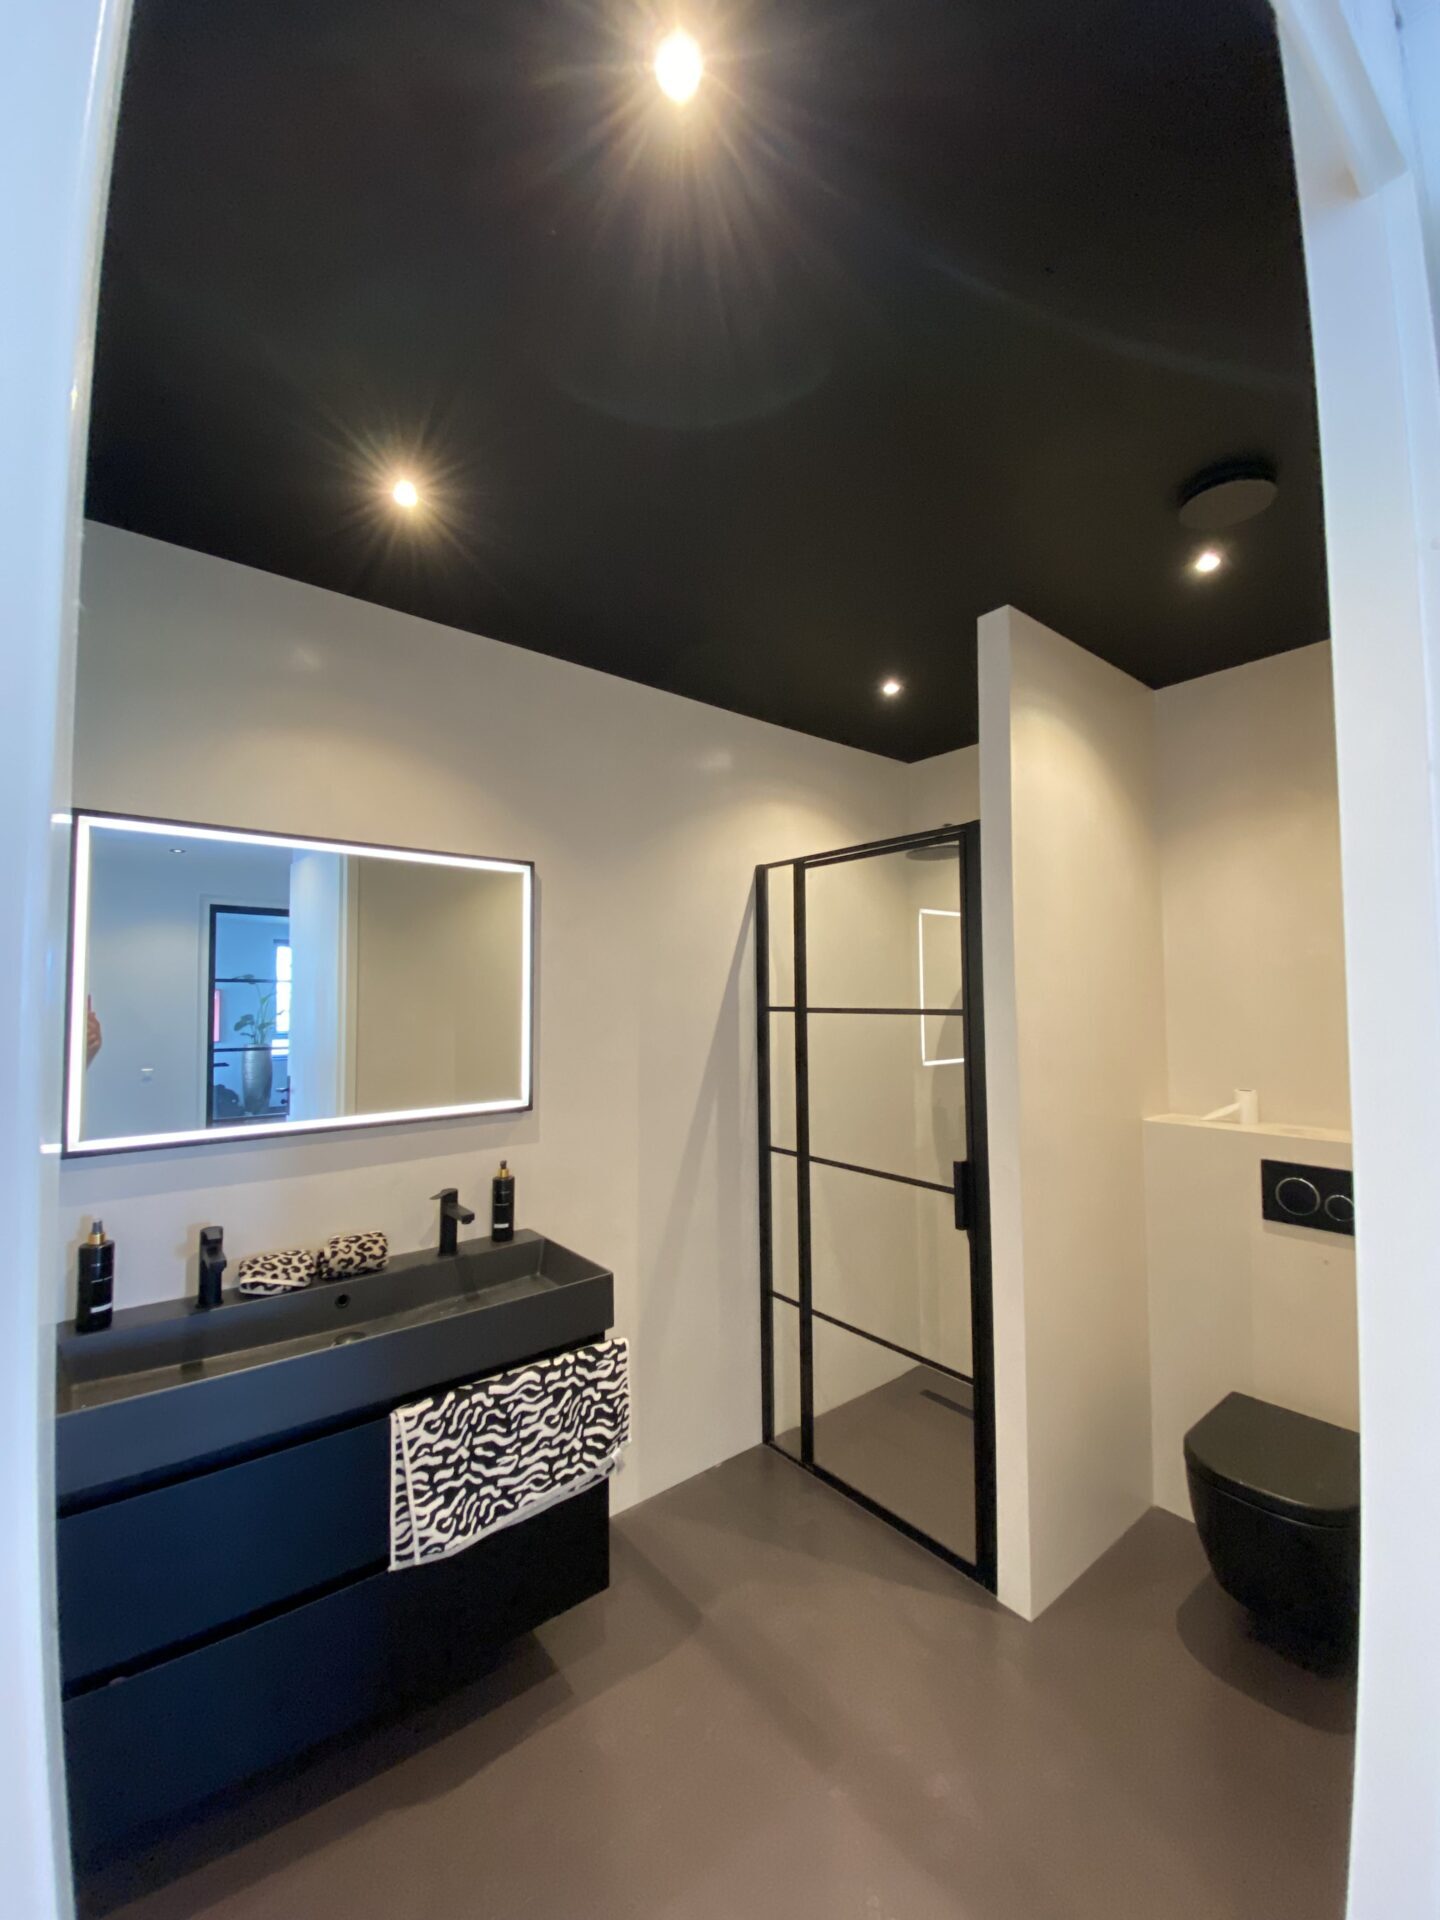 Impressie van badkamer met spanplafond met verlichting